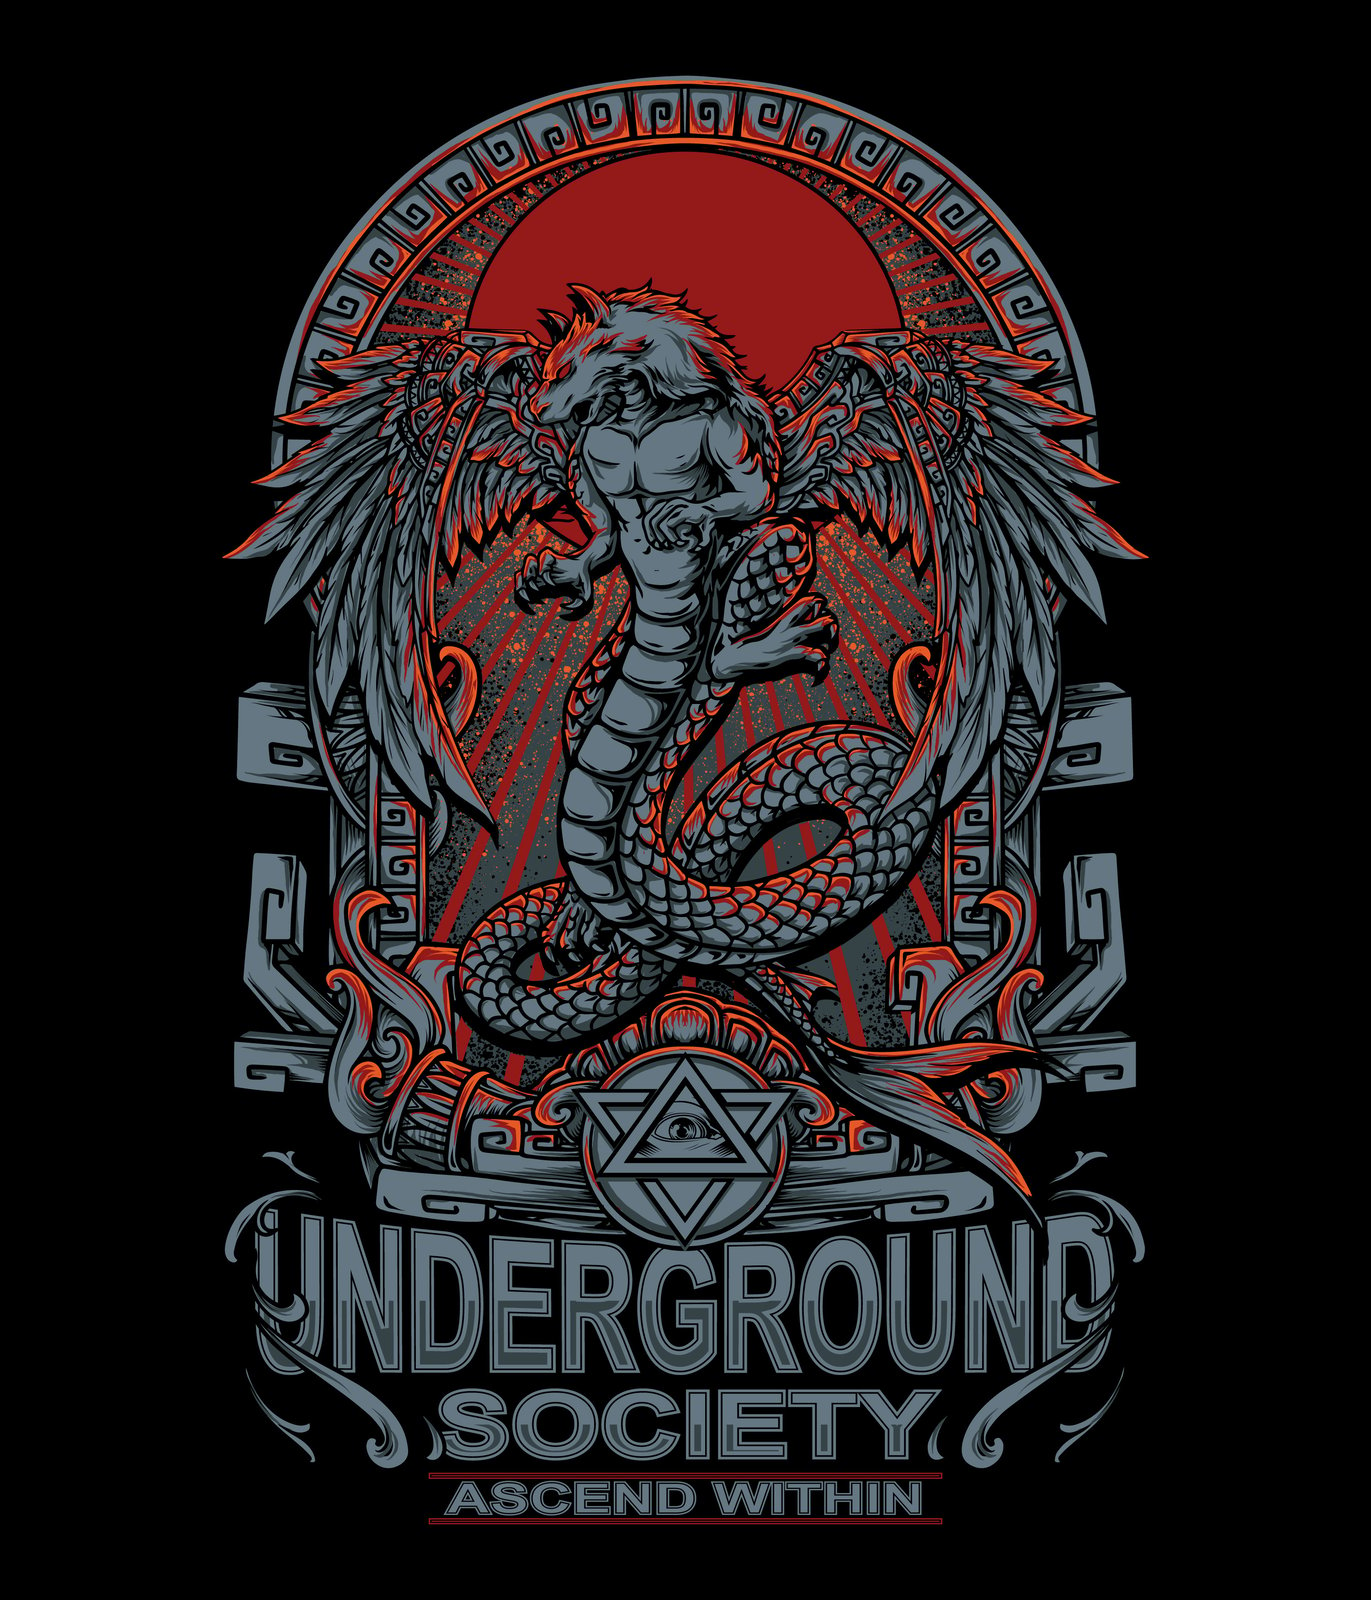 Underground Society